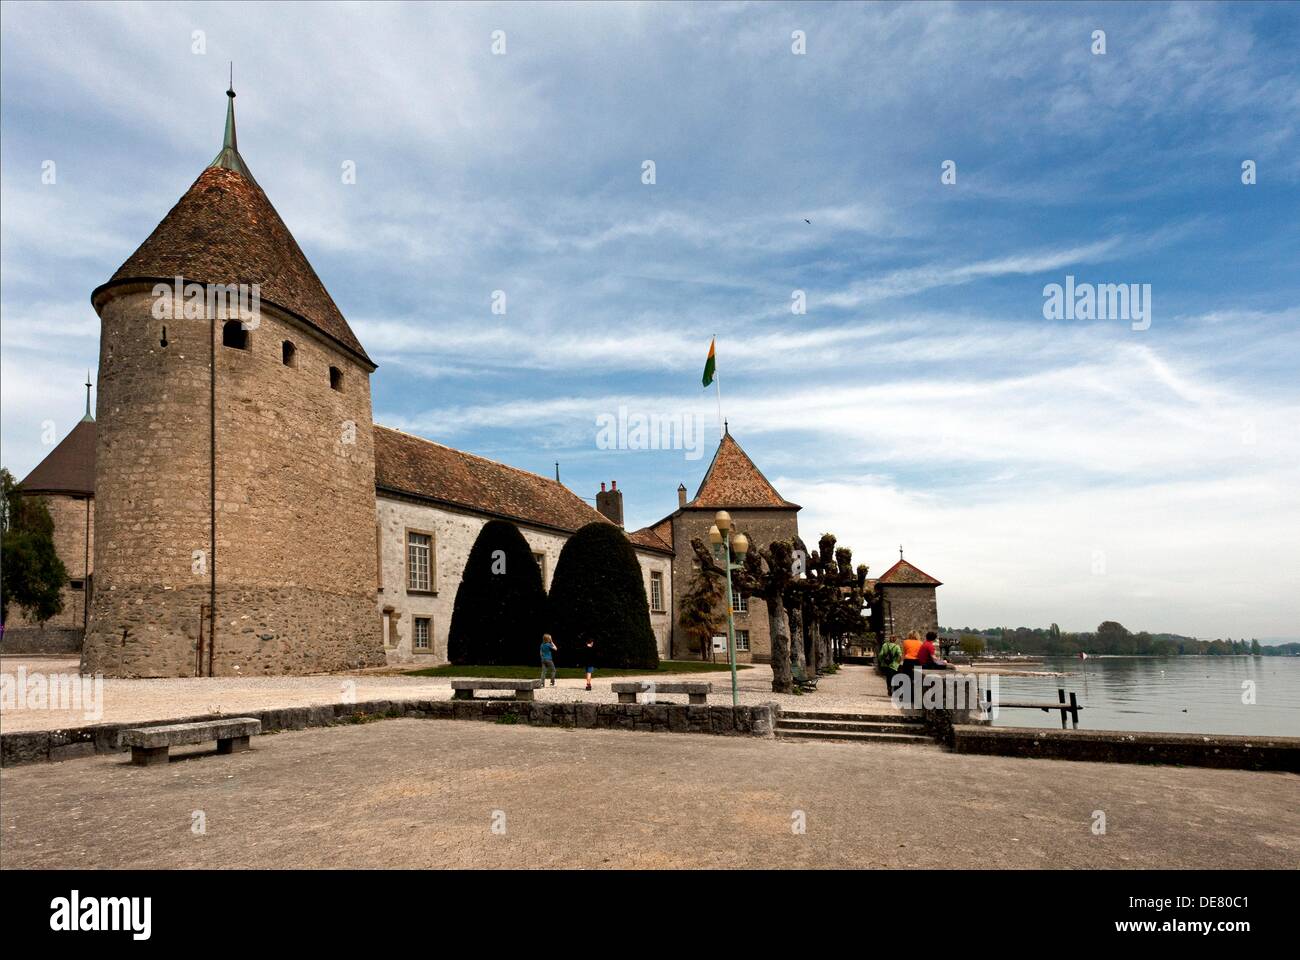 Chateau de Rolle, Rolle, canton Vaud, Suisse Romande, Switzerland, Europe  Stock Photo - Alamy